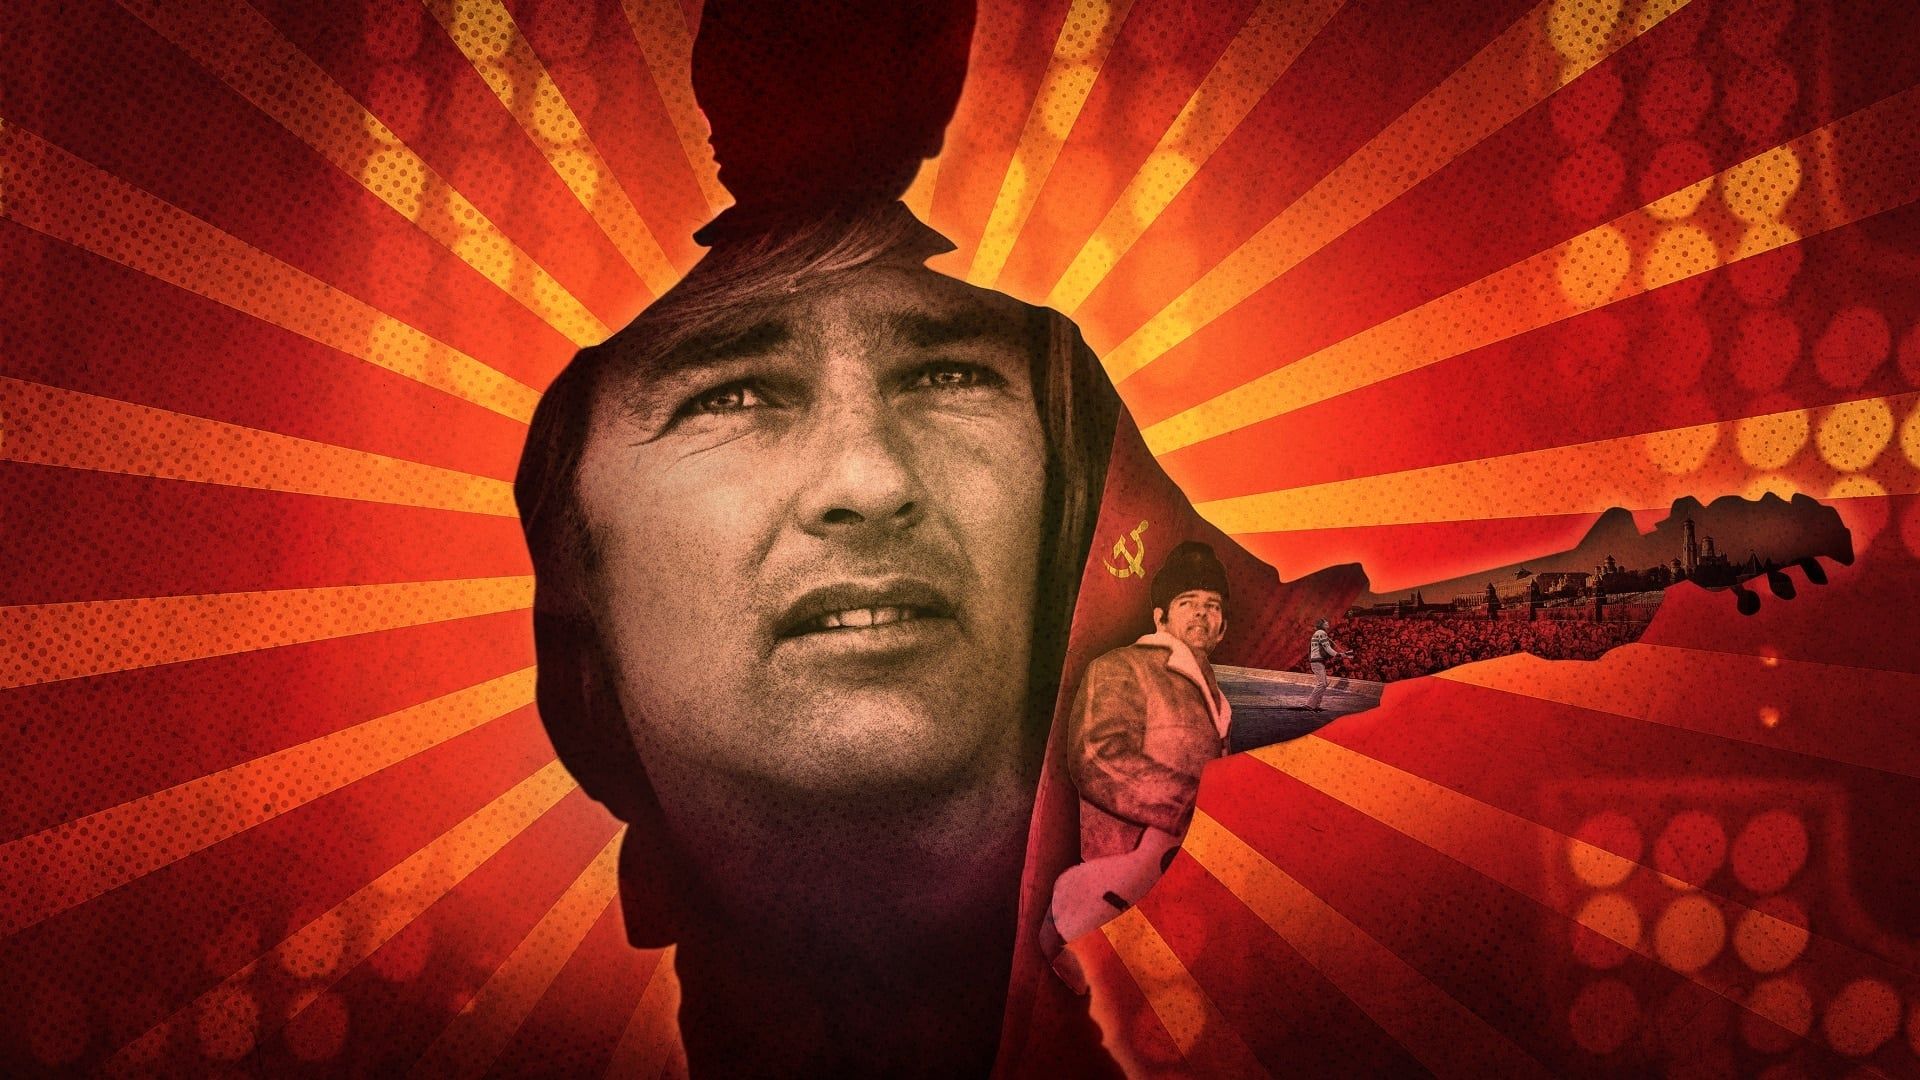 Red Elvis: The Cold War Cowboy background